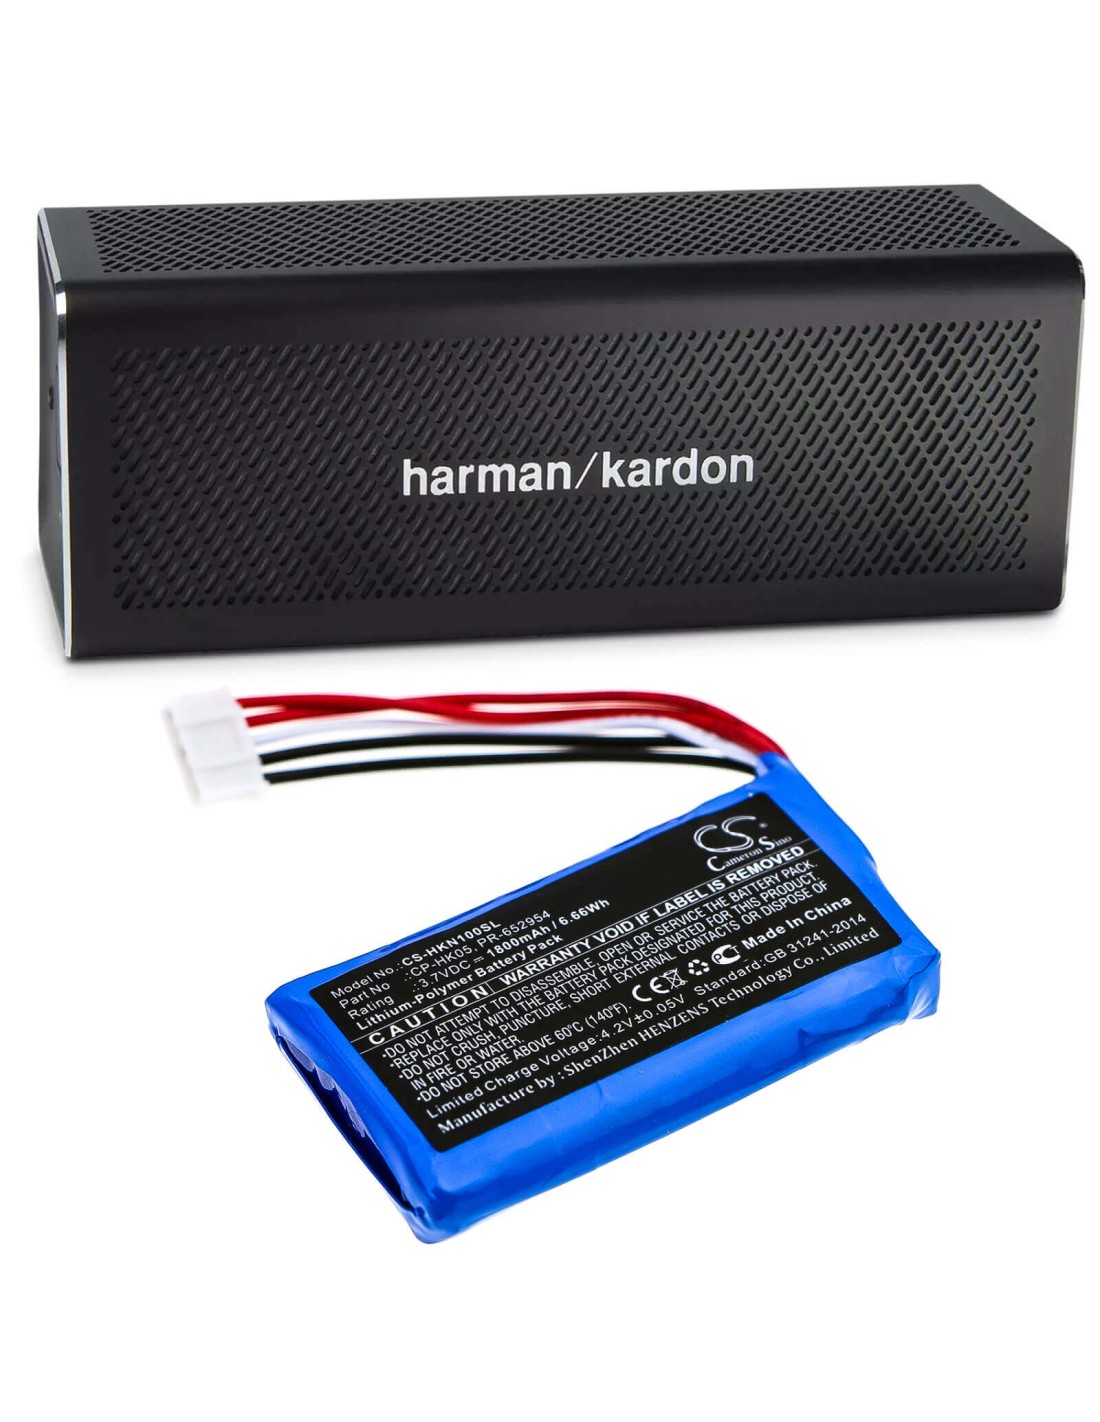 Battery for Harman/kardon, One 3.7V, 1800mAh - 6.66Wh